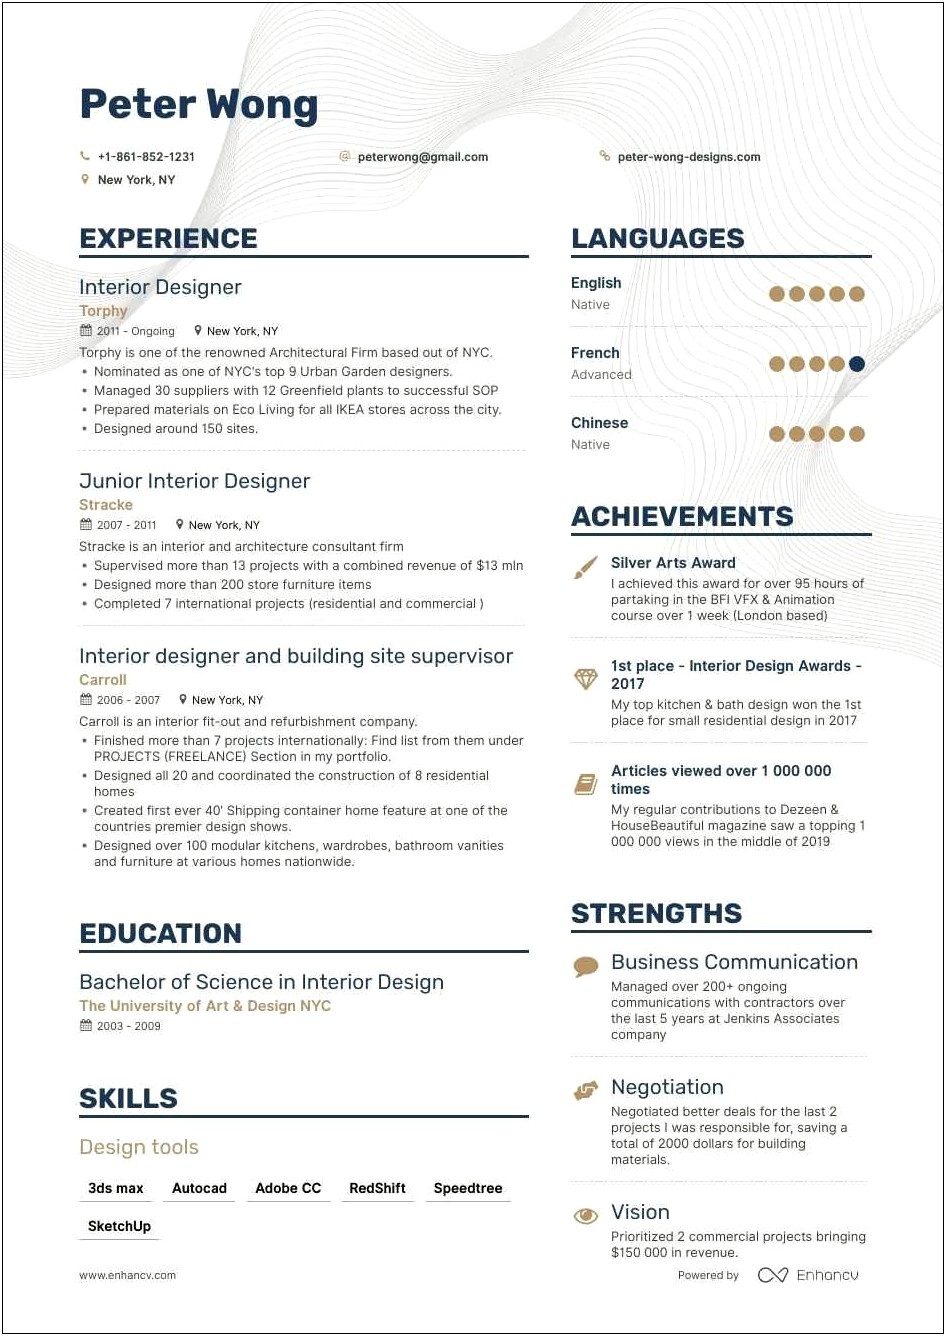 Resume Objective For Interior Designer